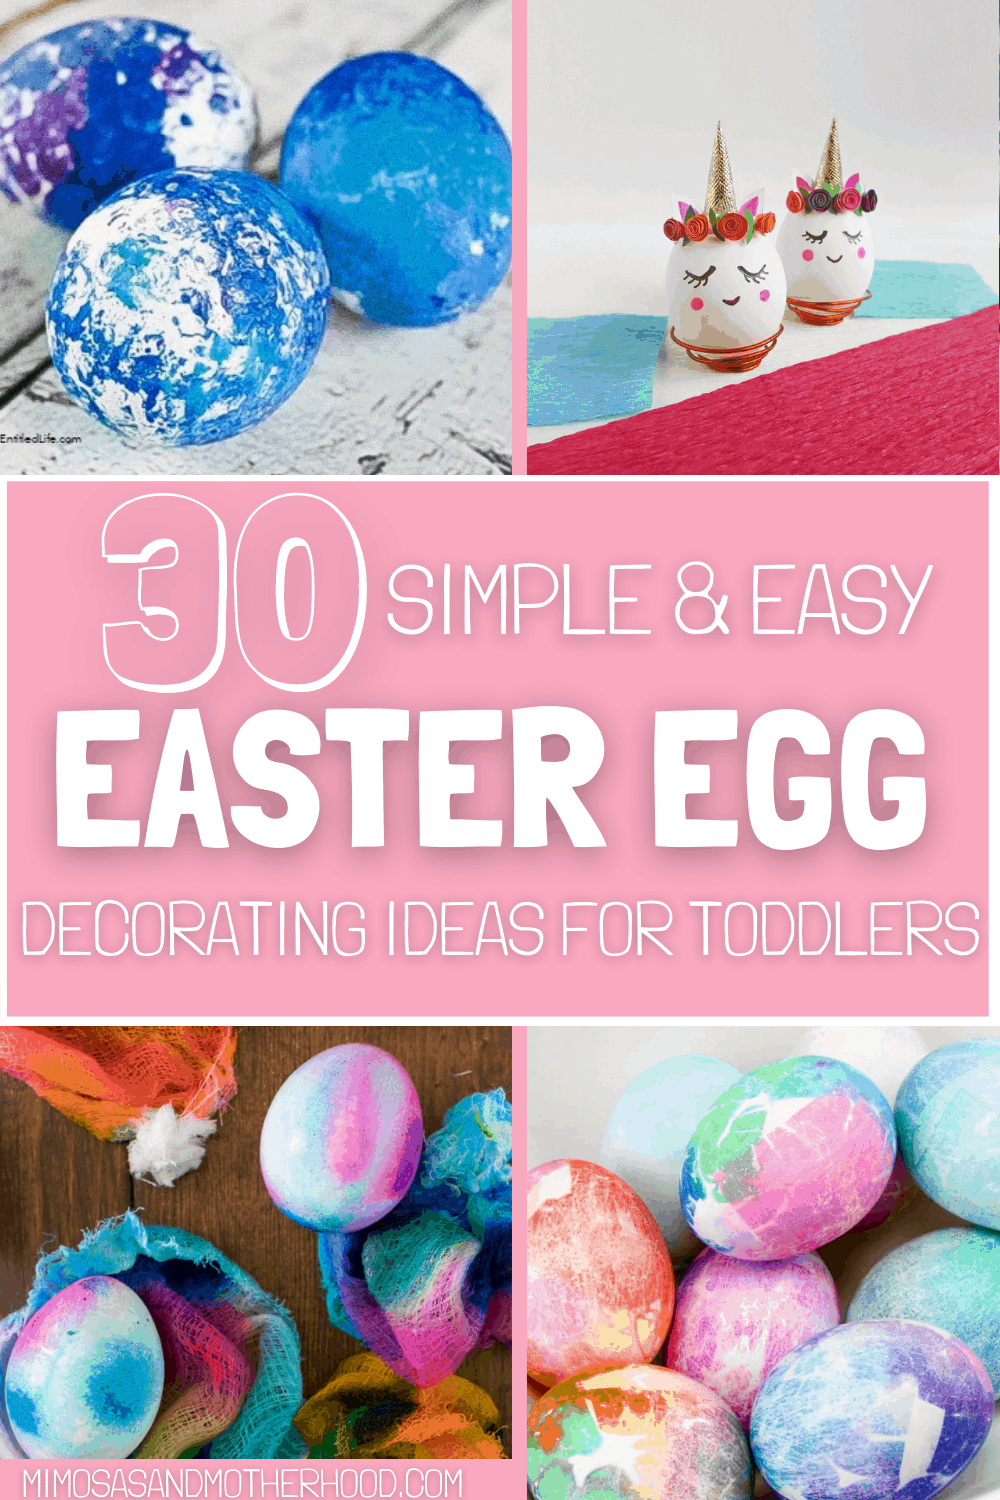 40 Easy Toddler Easter Egg Decorating Ideas